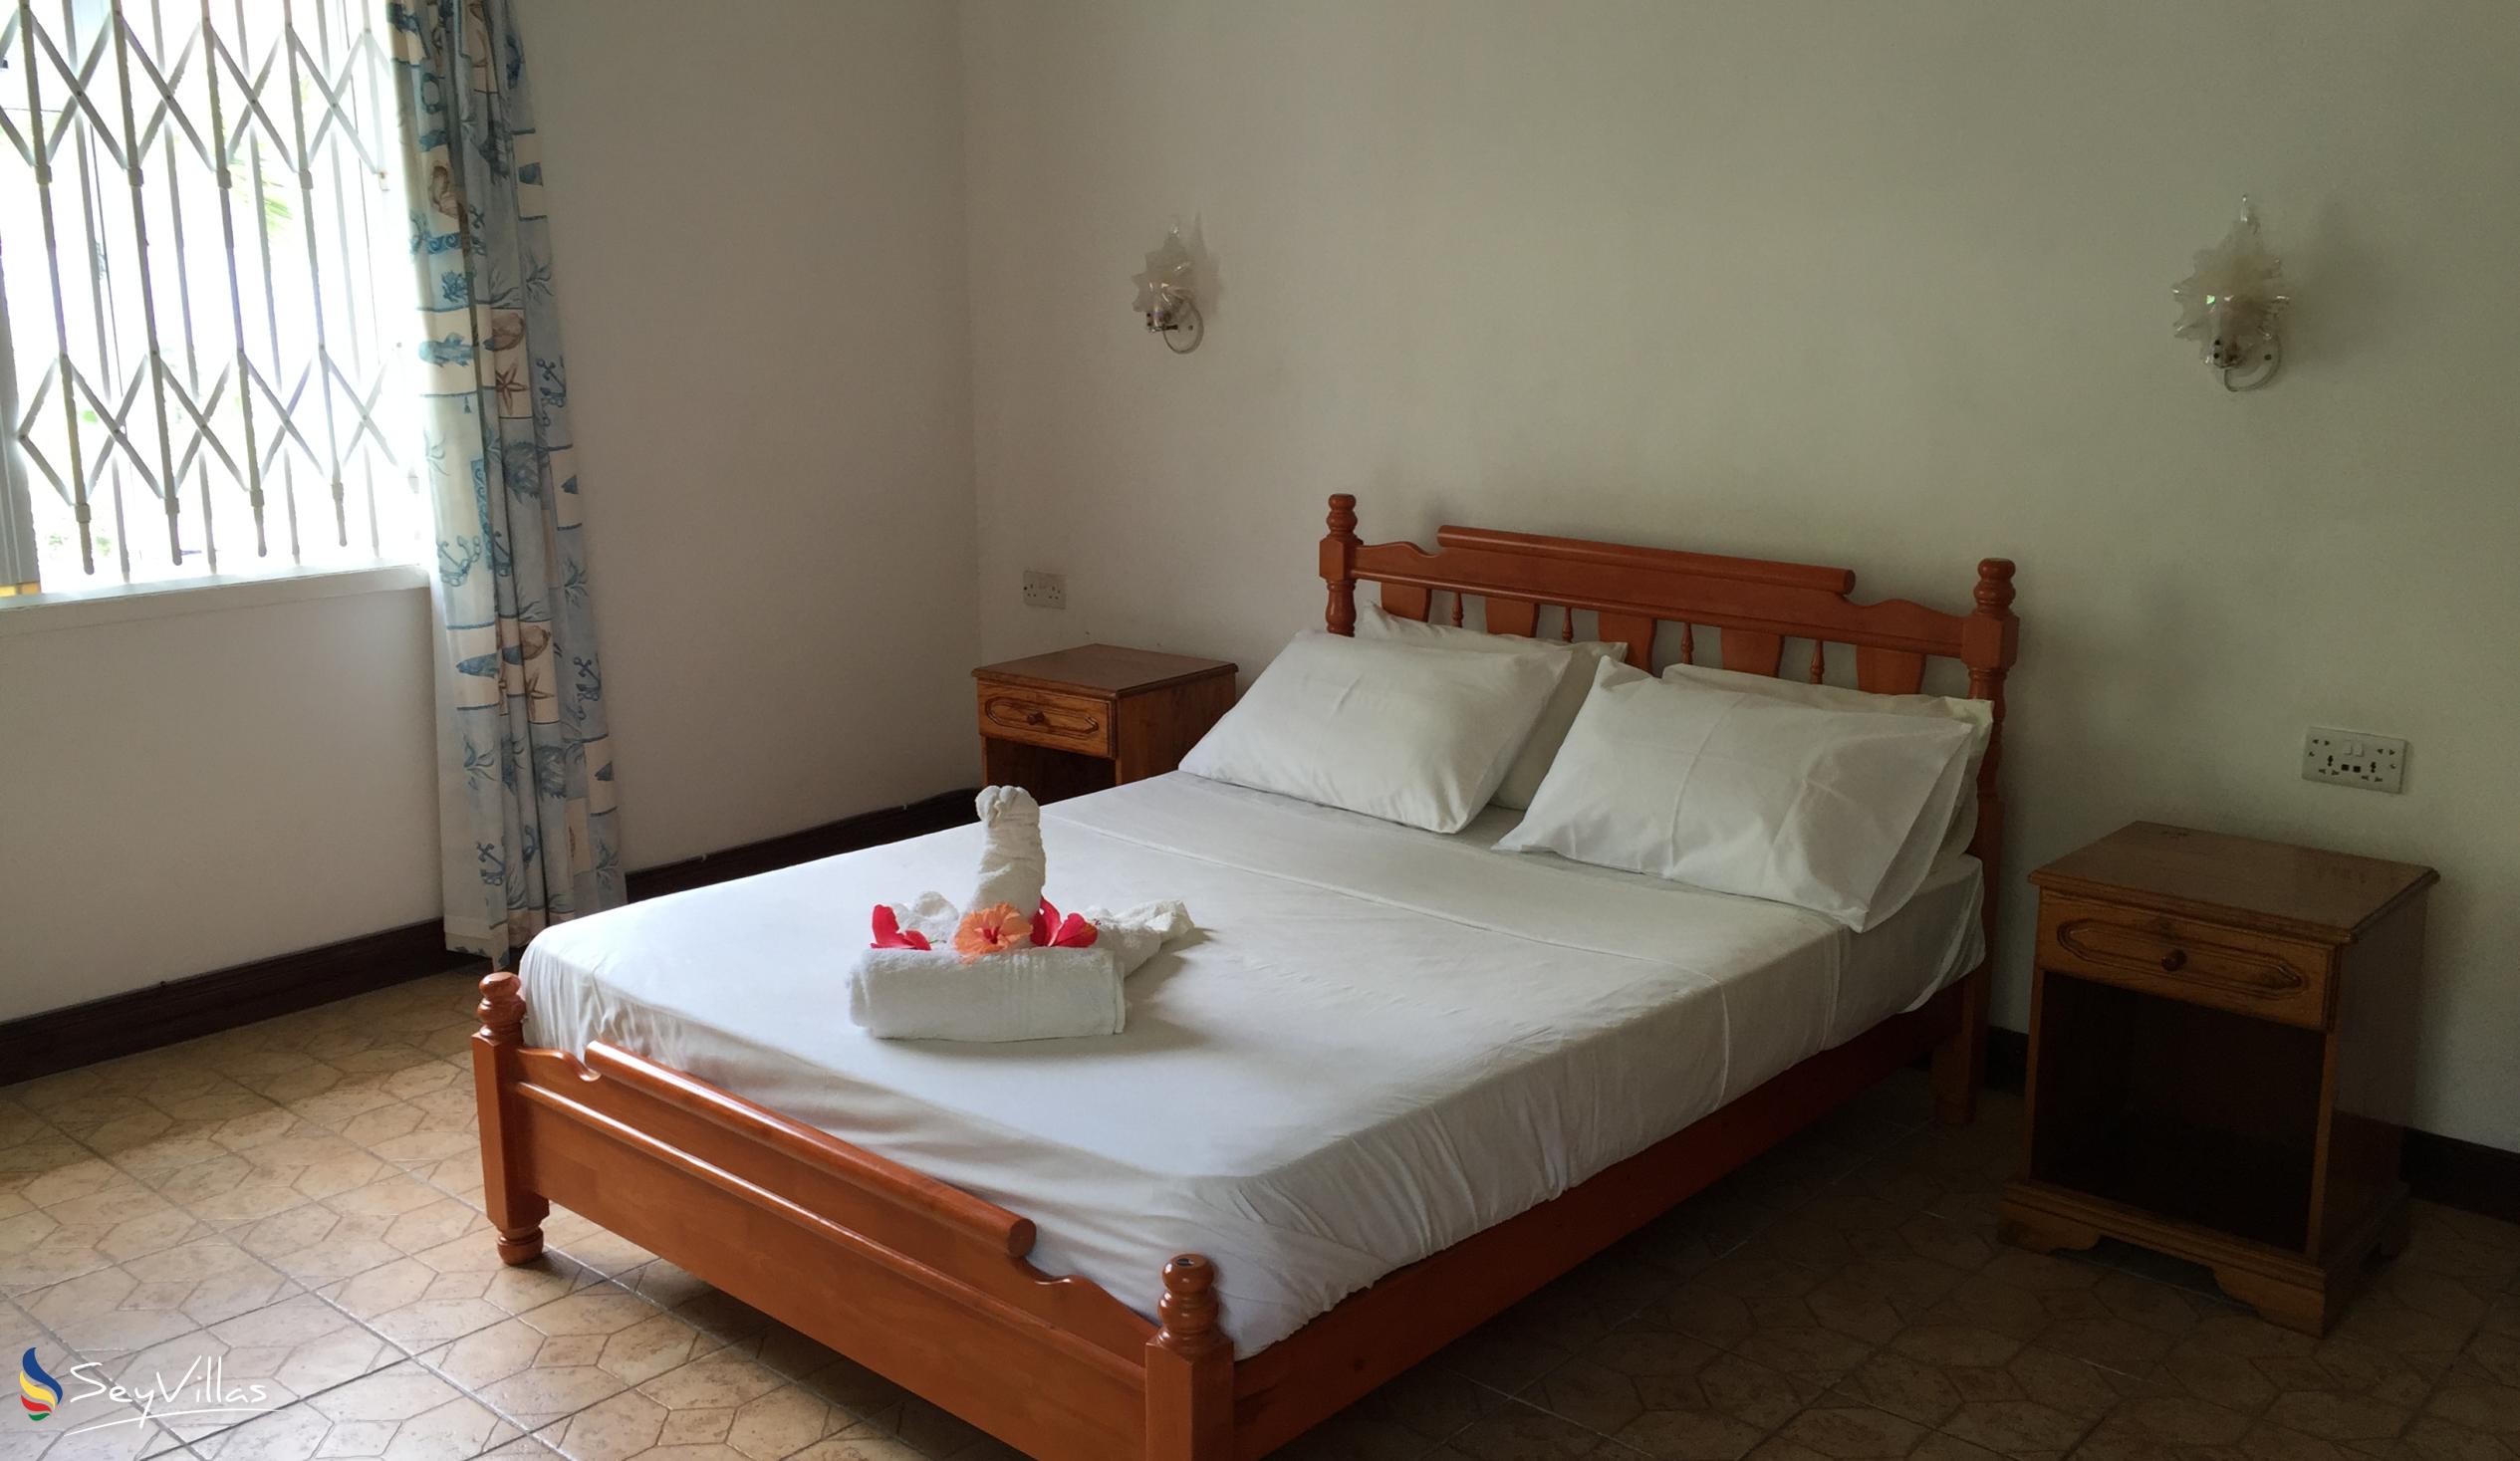 Photo 124: Lazare Picault Hotel - 2-Bedroom Villa - Mahé (Seychelles)